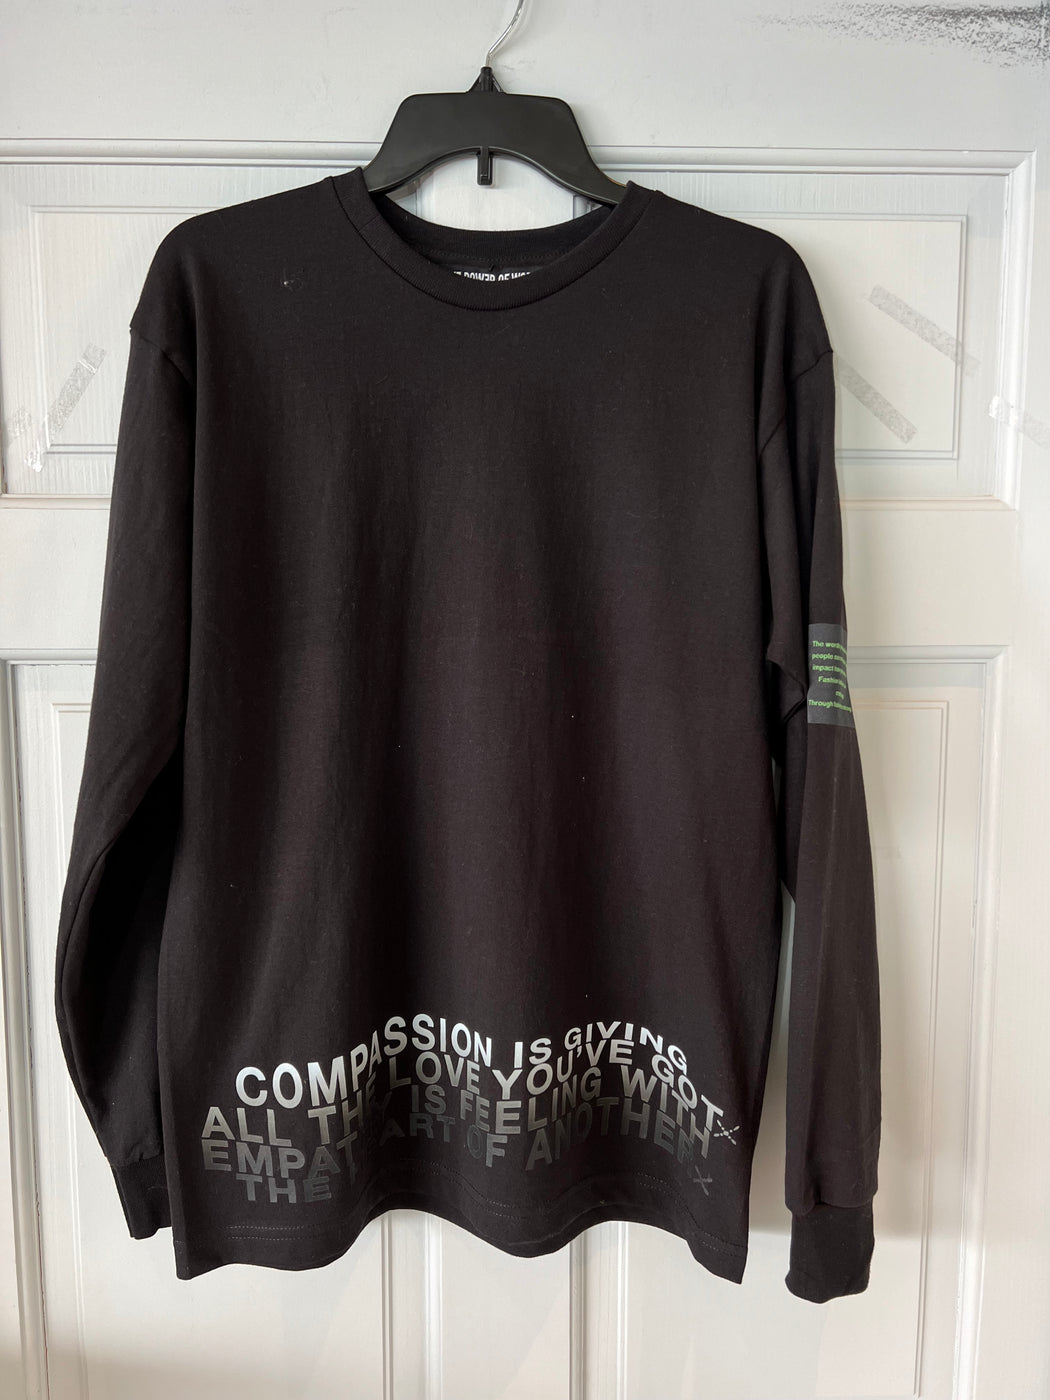 Unisex Compassion Crewneck Long sleeve tee shirt in Black